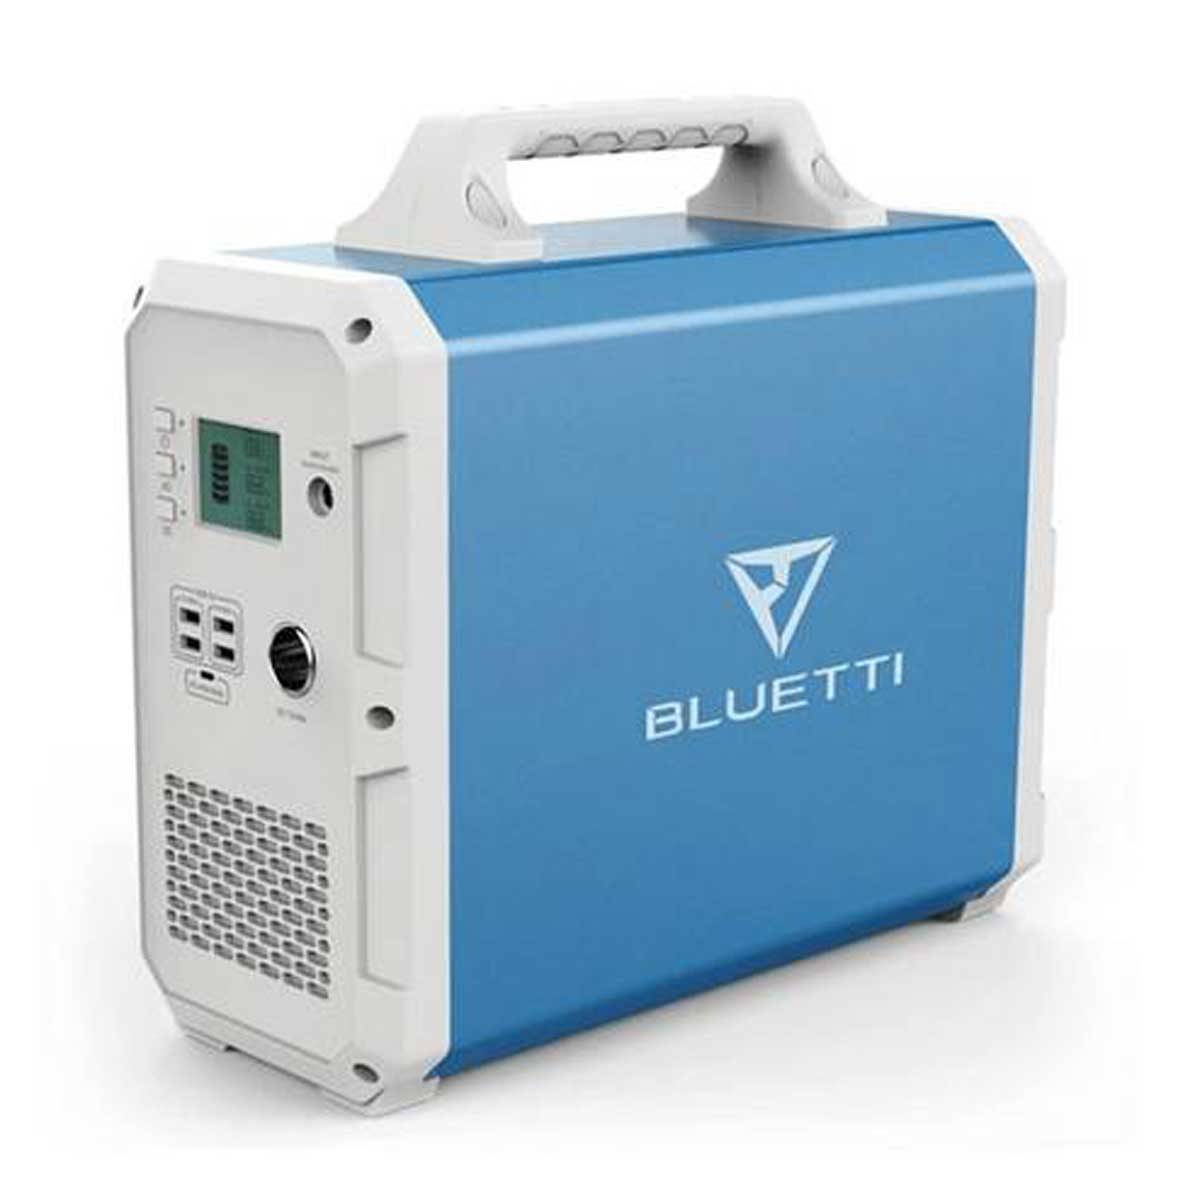 Bluetti EB150 Portable Power Station blau 1000W 1500Wh, tragbarer Stromerzeuger 